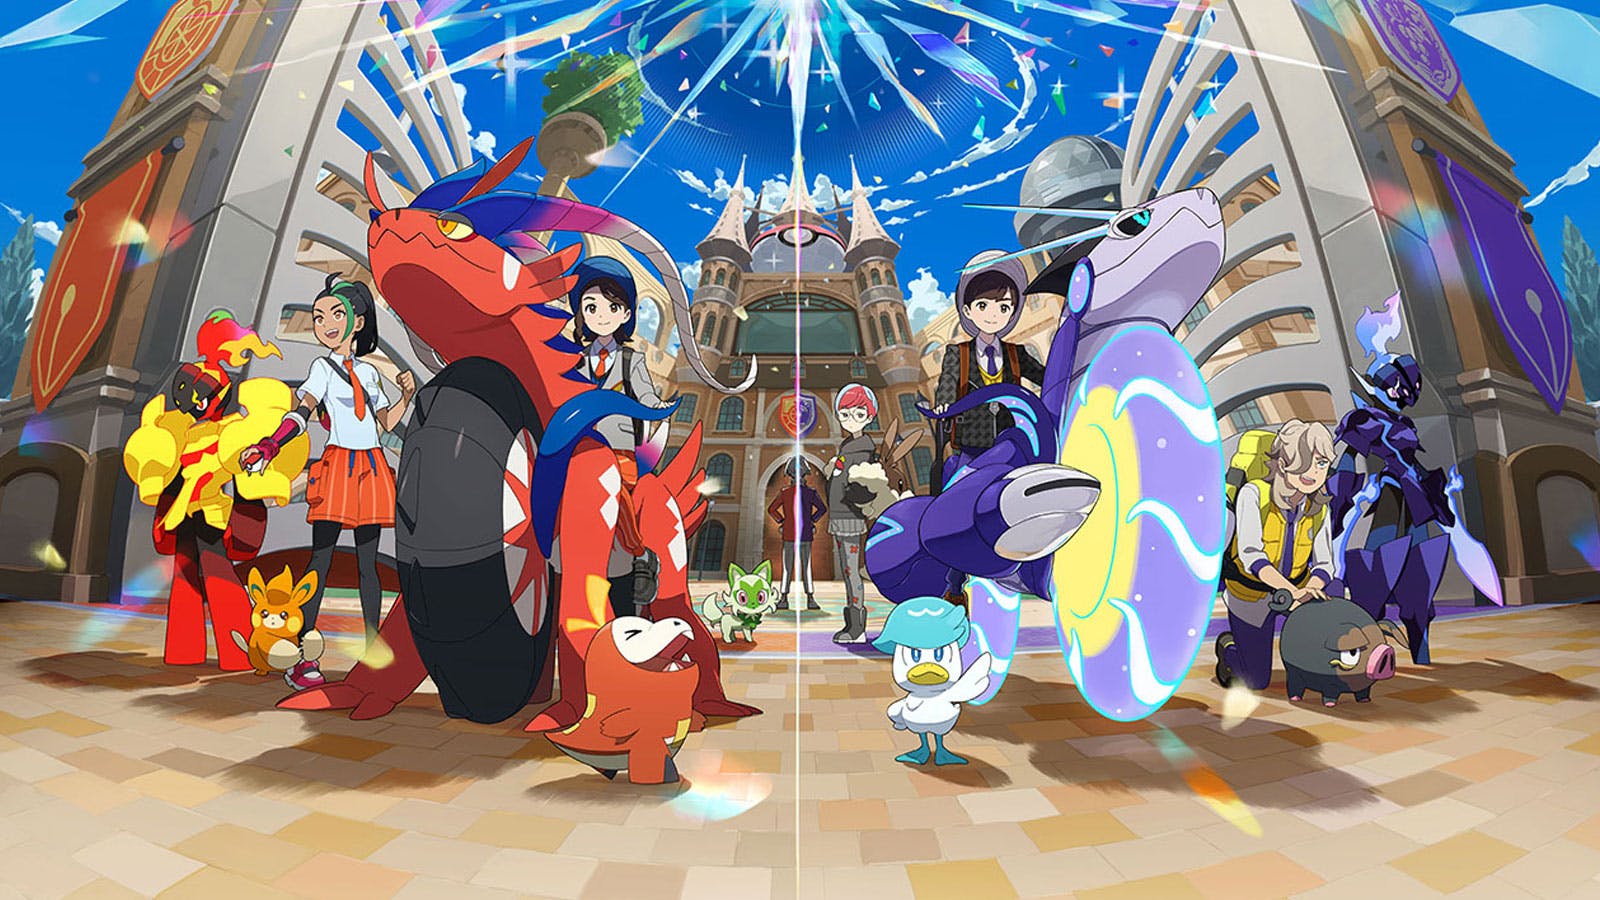 New 'Pokémon Sword and Shield' Trailer Shows Off New Battle Mechanics